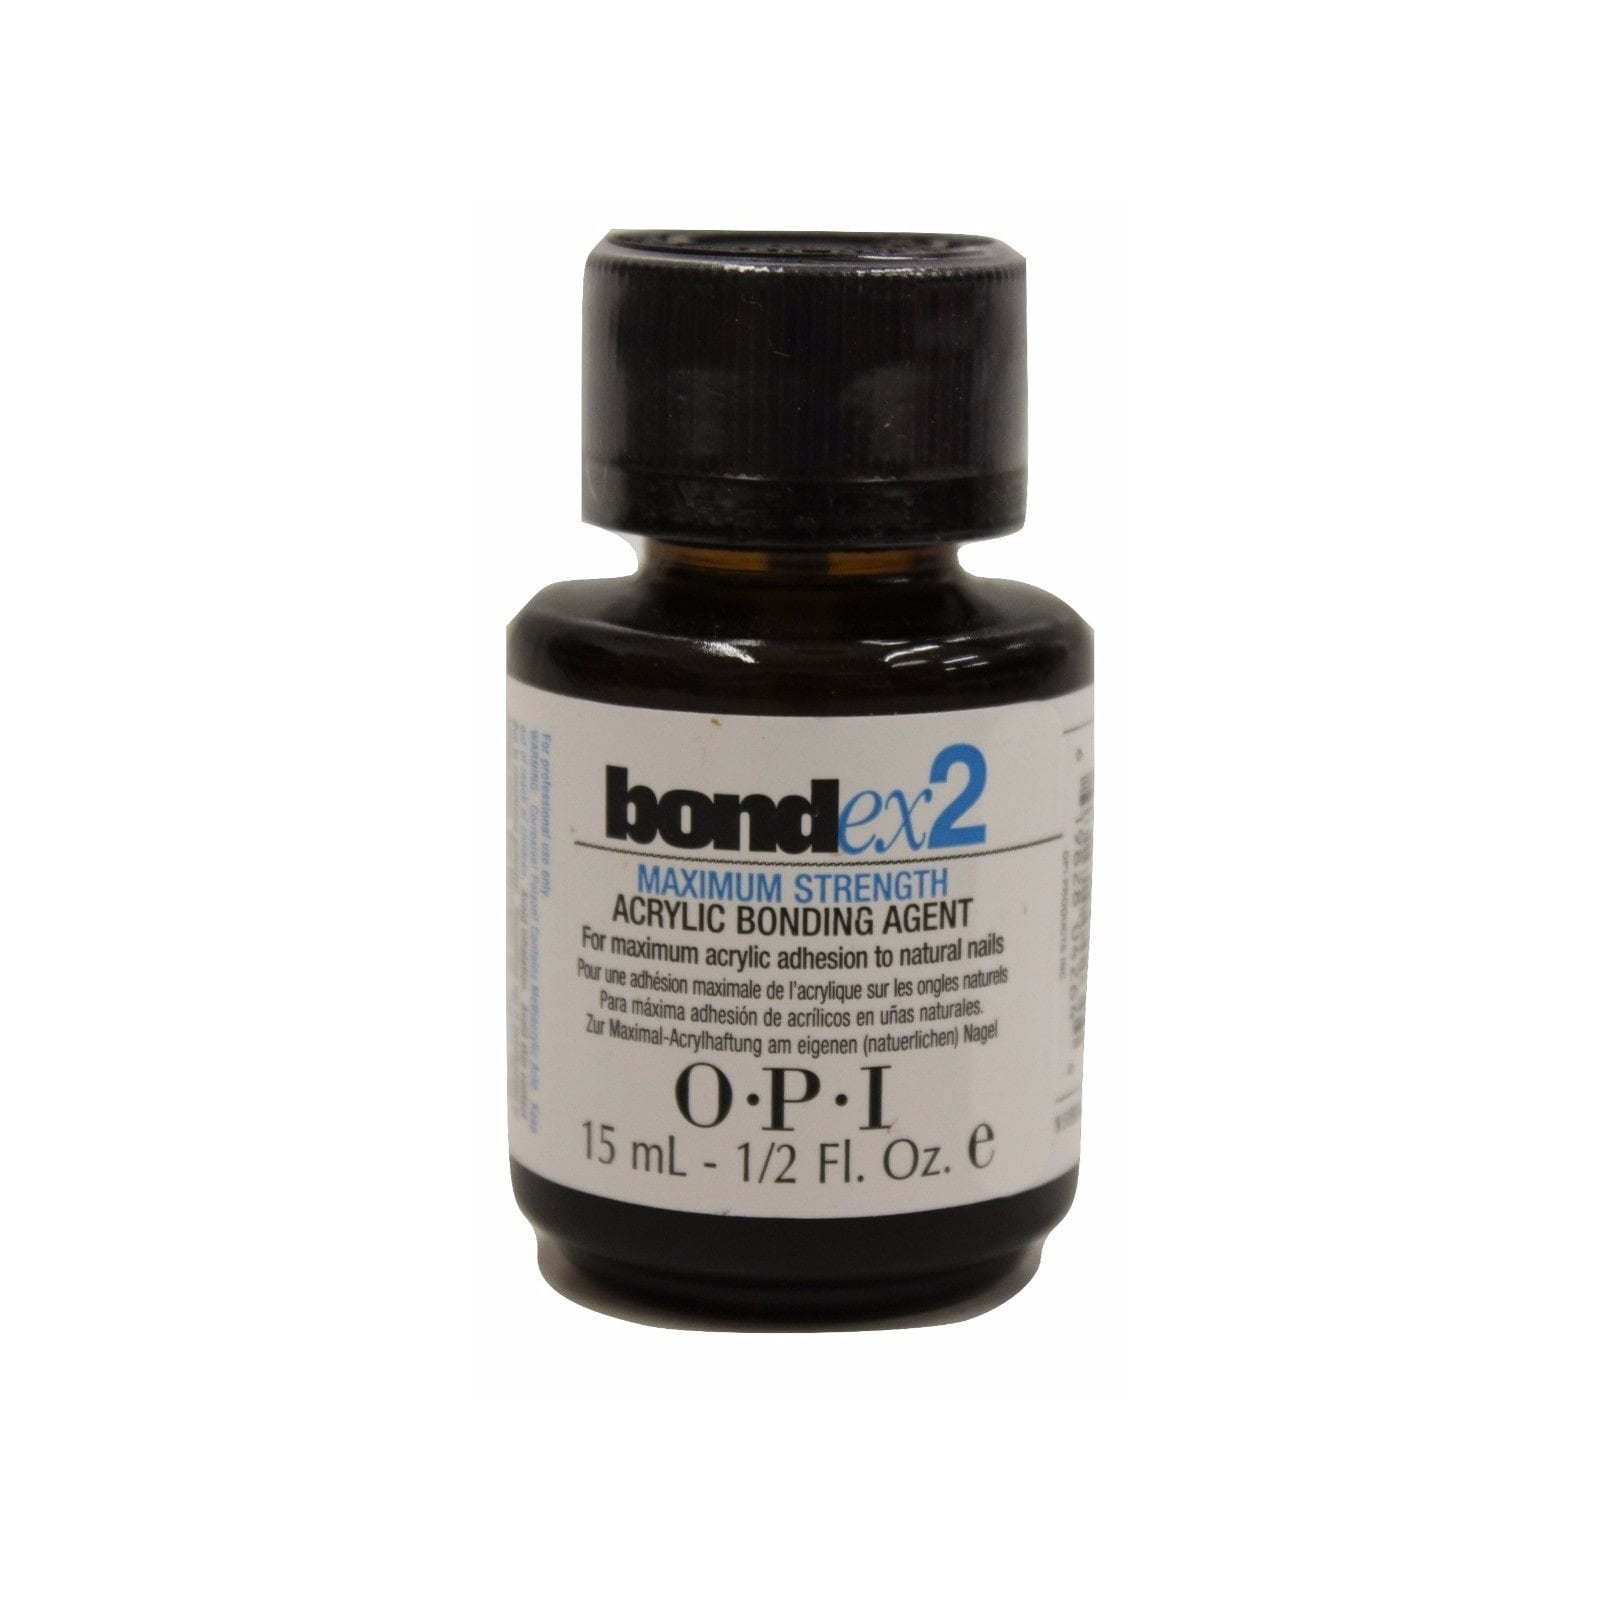 OPI Bondex Acrylic Bonding Agent (1 oz)